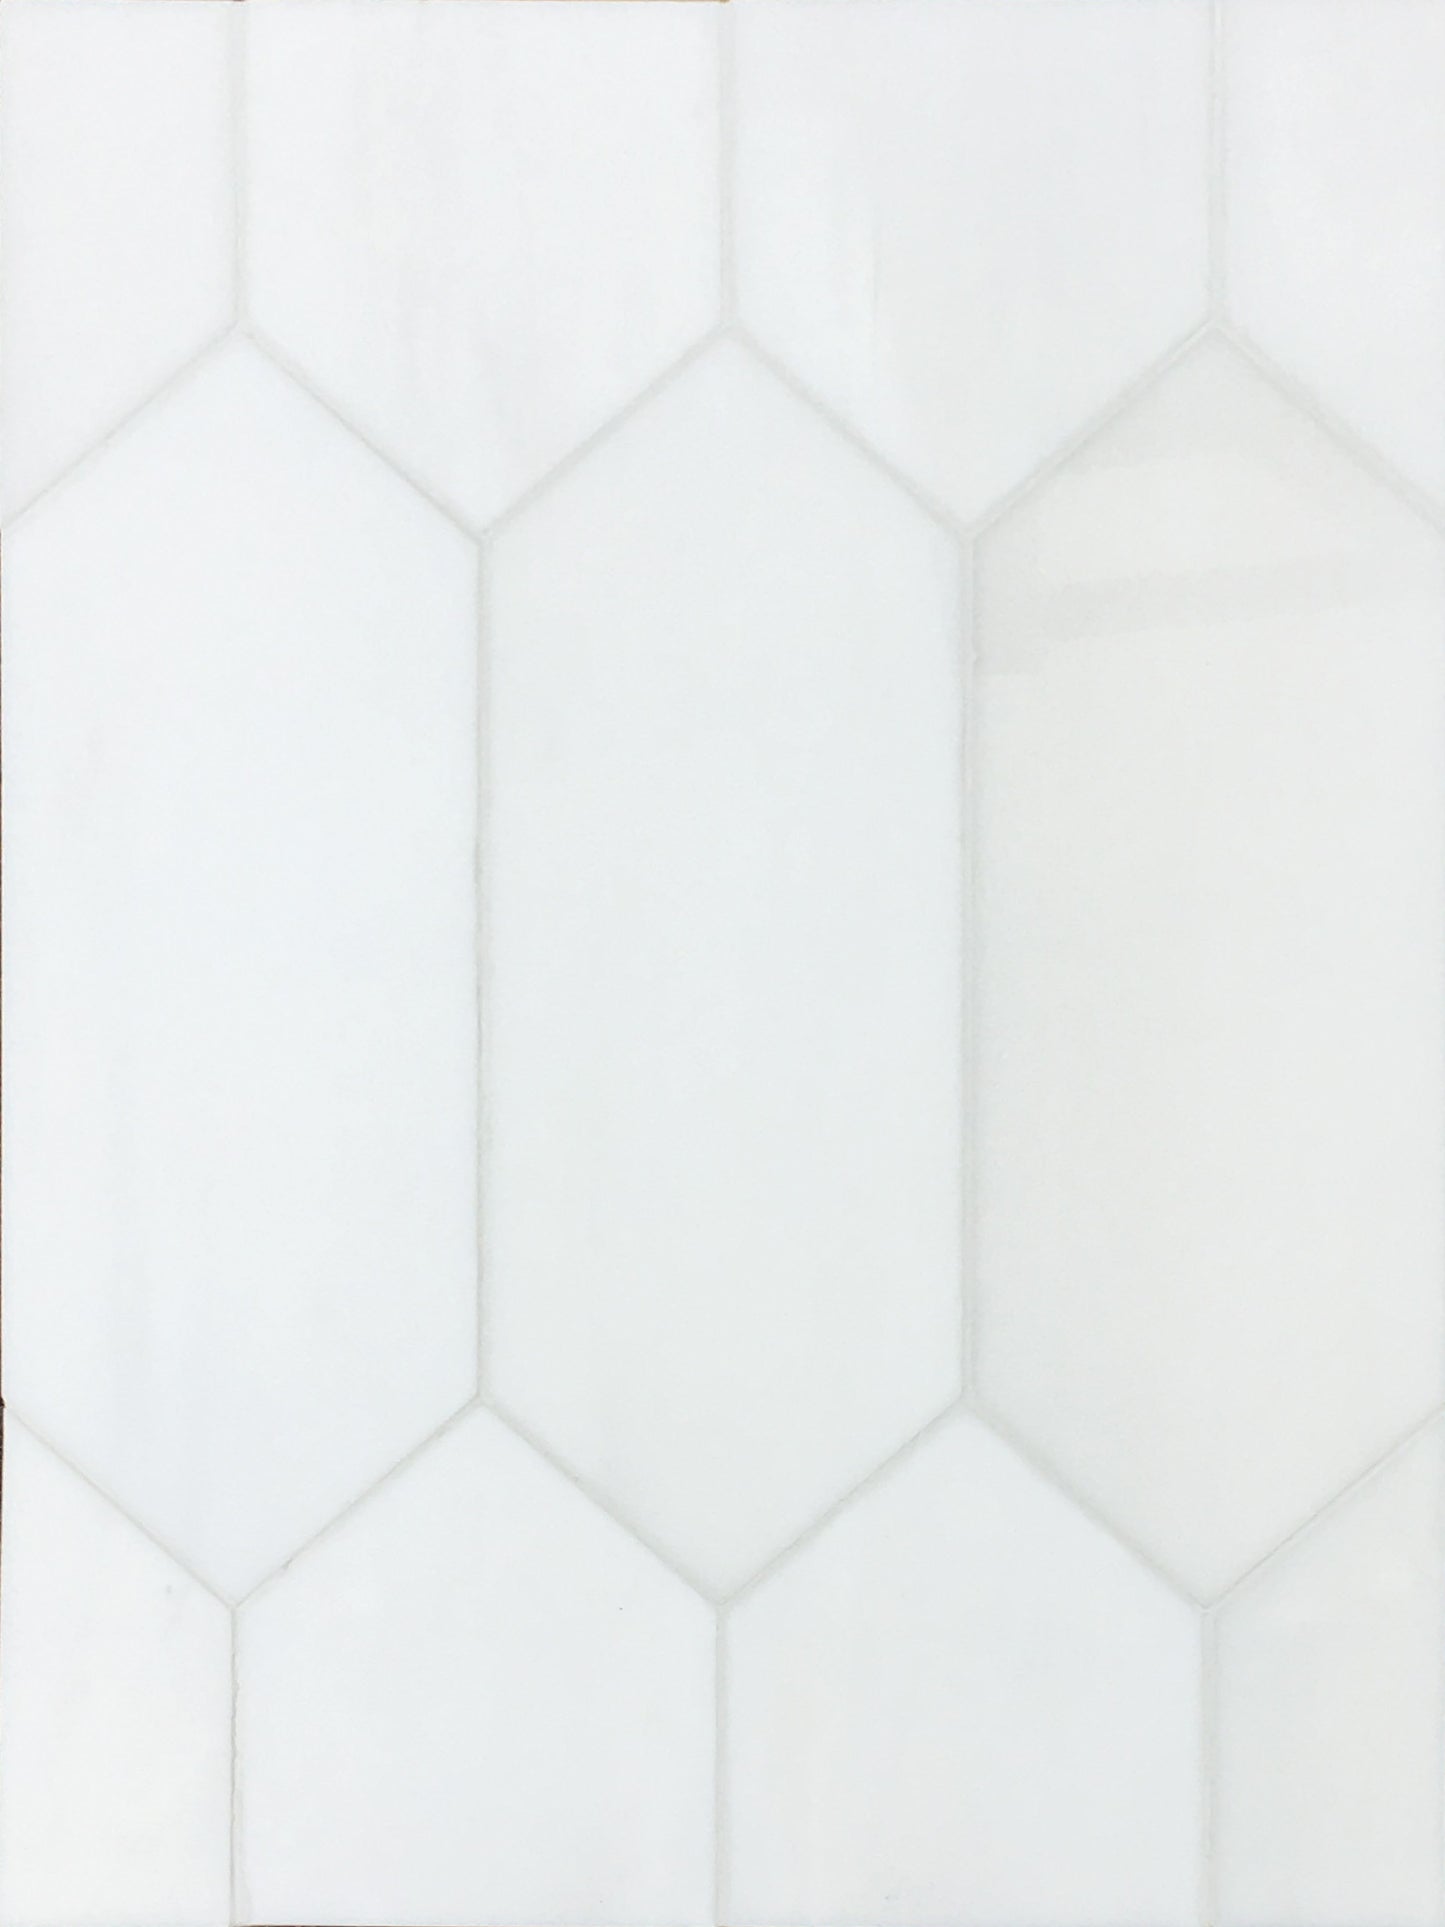 Bianco Dolomite 4"x 12" Picket Tile